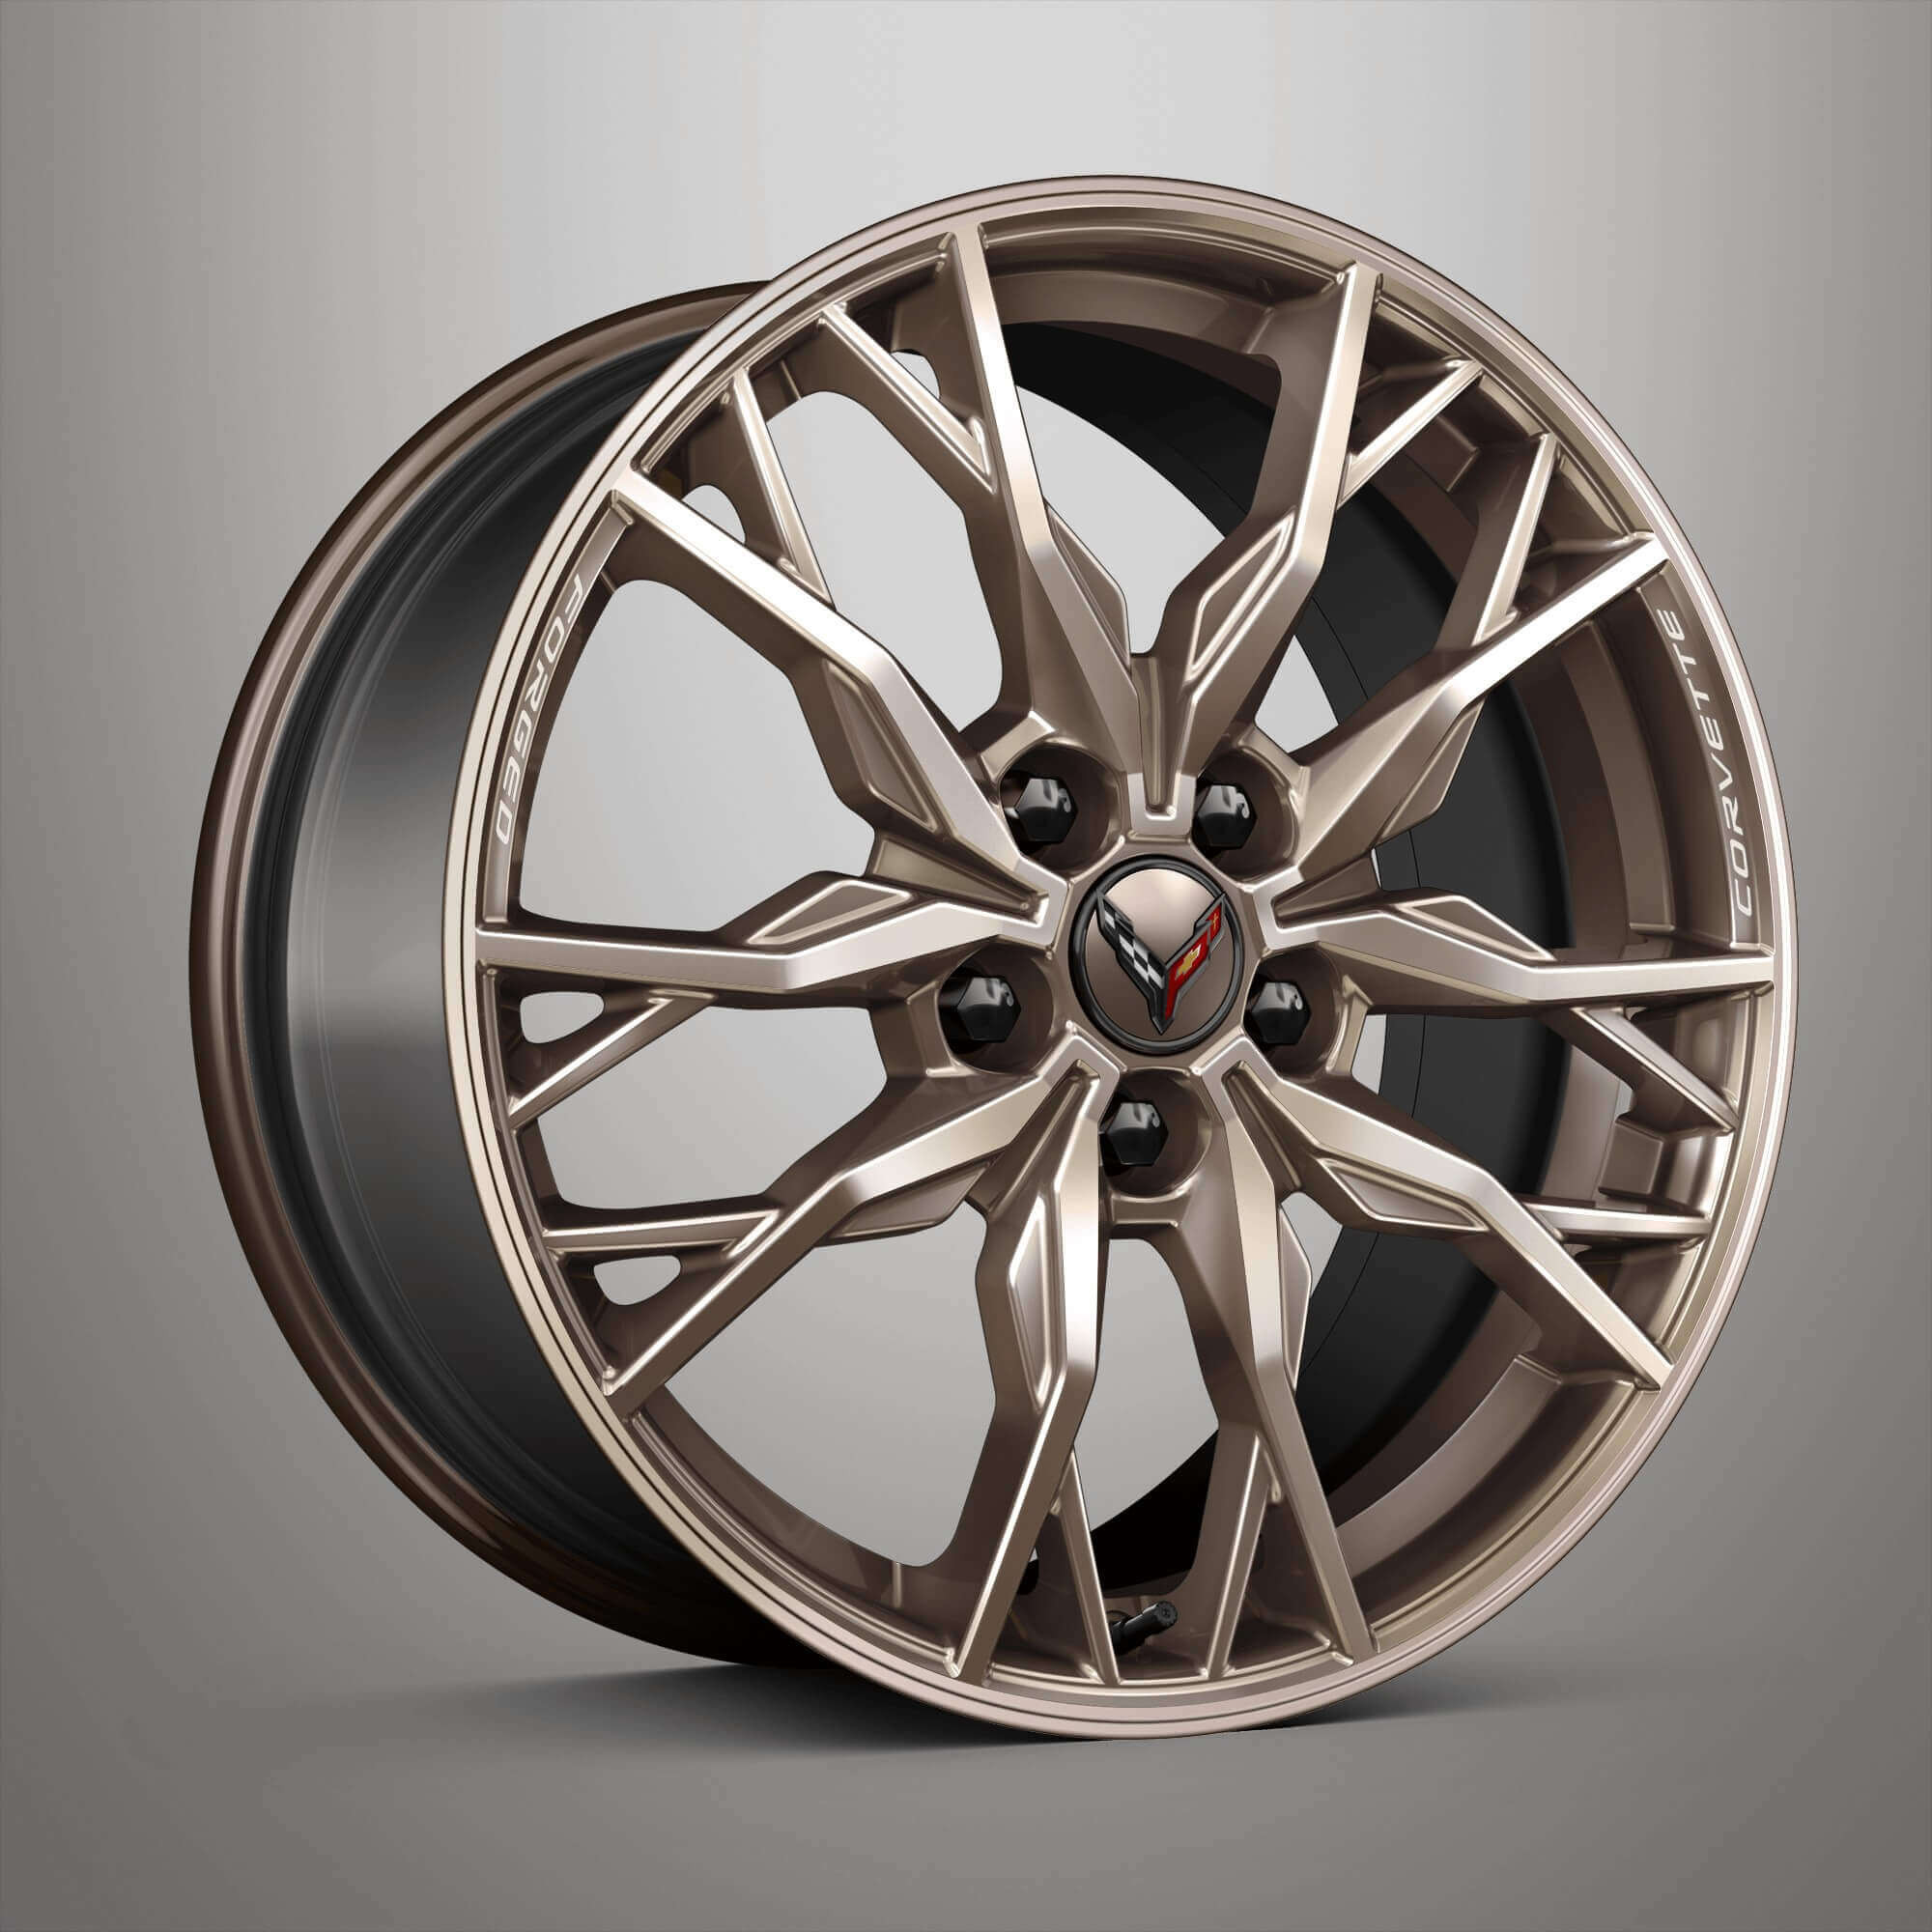 LPO, 20-spoke Tech Bronze forged aluminum wheels $3,195